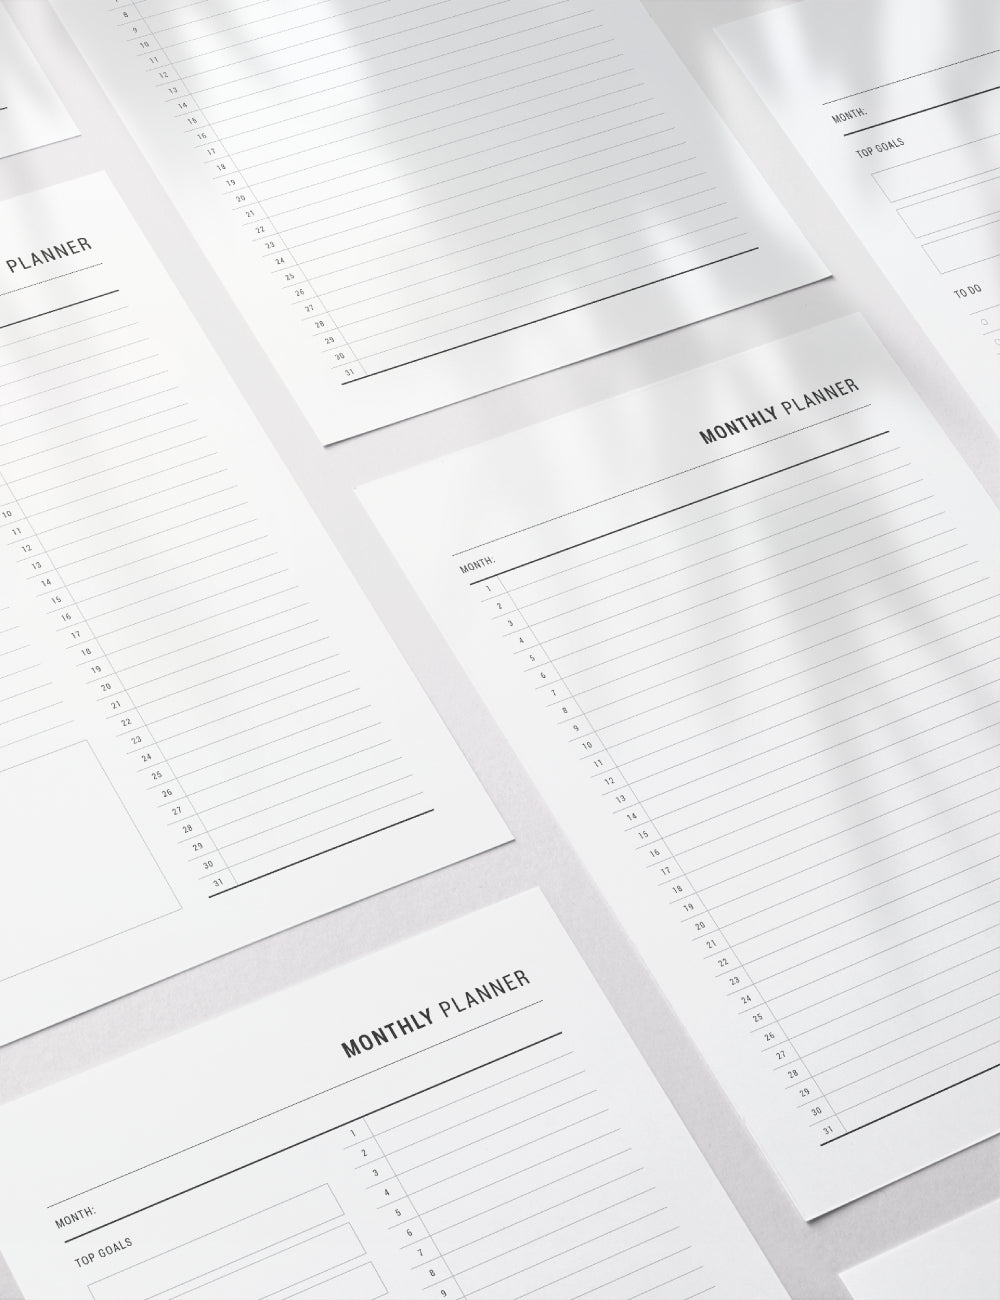 Printable Monthly Planner | Undated | Printable Planner Essentials | A4 | A5 | US Letter | Printable Planner Pages | Minimal Aesthetic | Clean Design | PDF + JPEG | PAPER MOON Art & Design